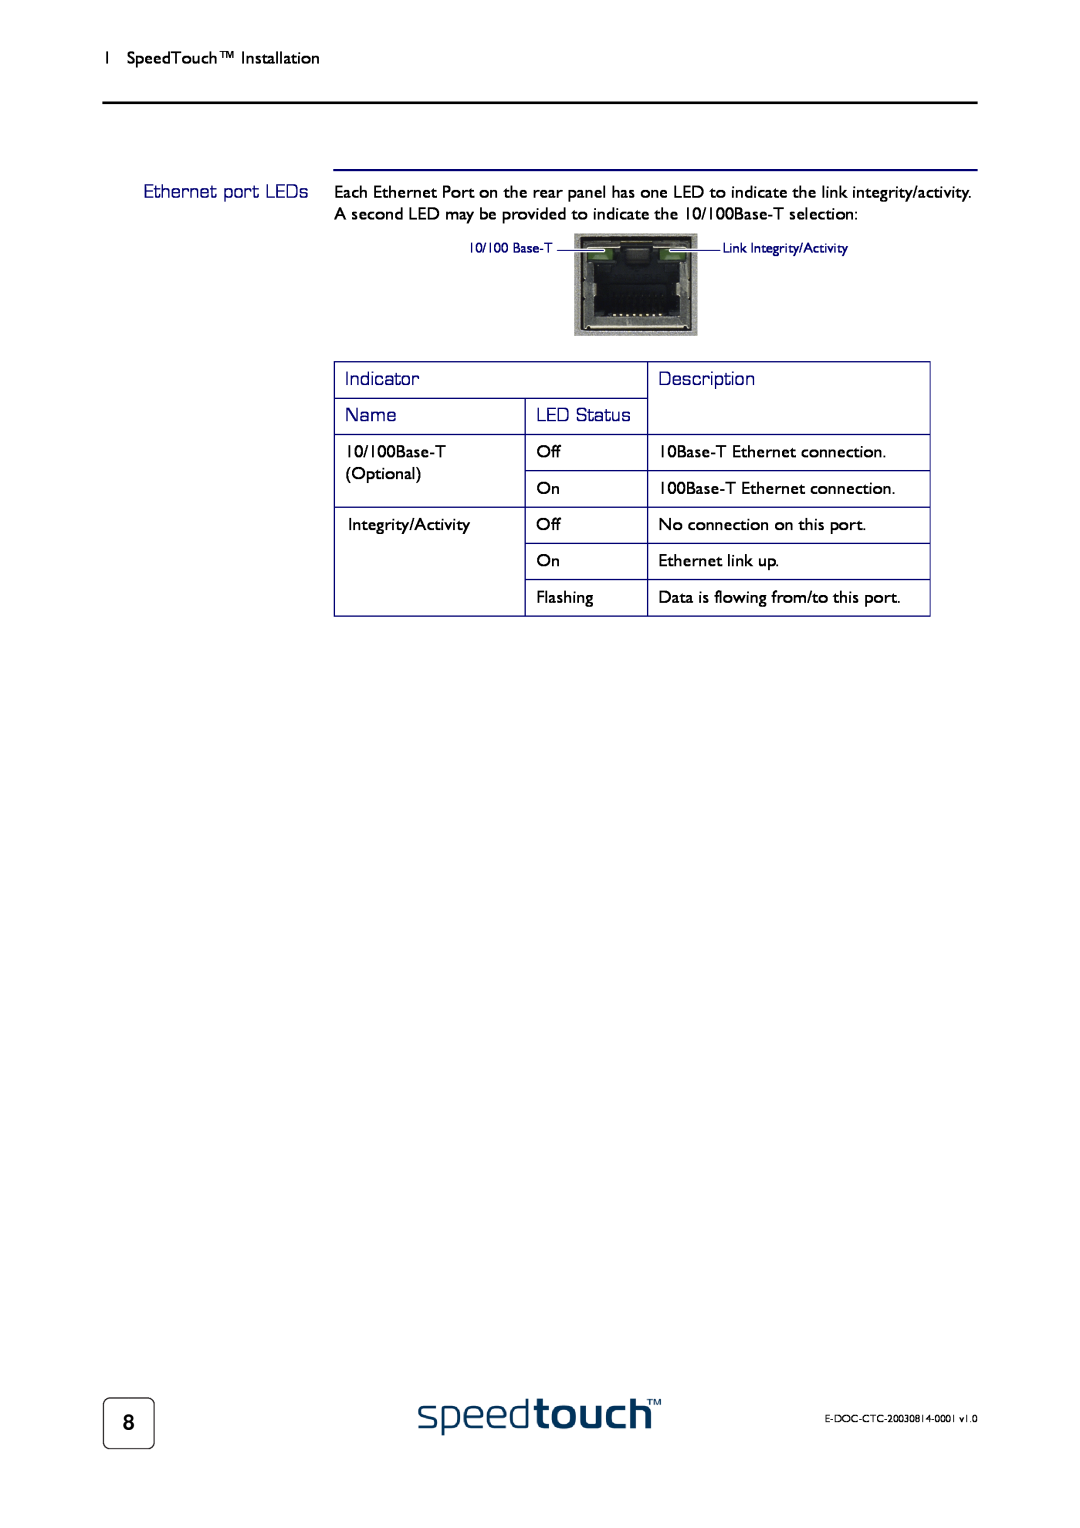 Technicolor - Thomson 545/570 manual LED Status, Indicator, Description, Name, 10/100 Base-T, Link Integrity/Activity 